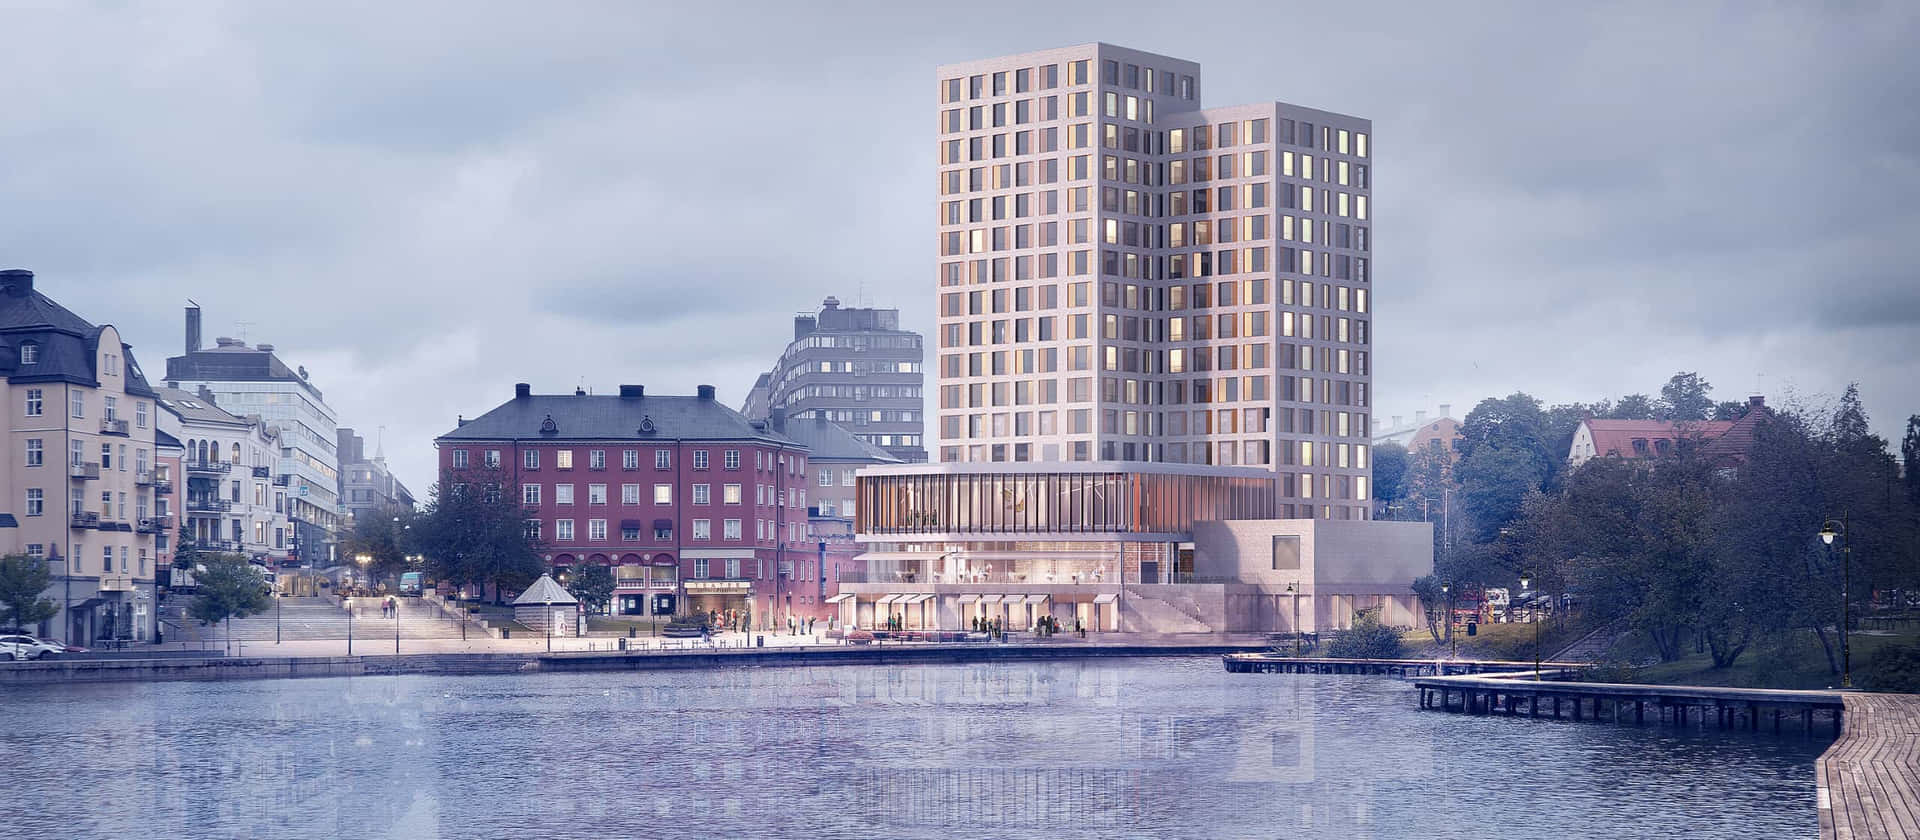 Sodertalje Waterfront Architecture Sweden Wallpaper